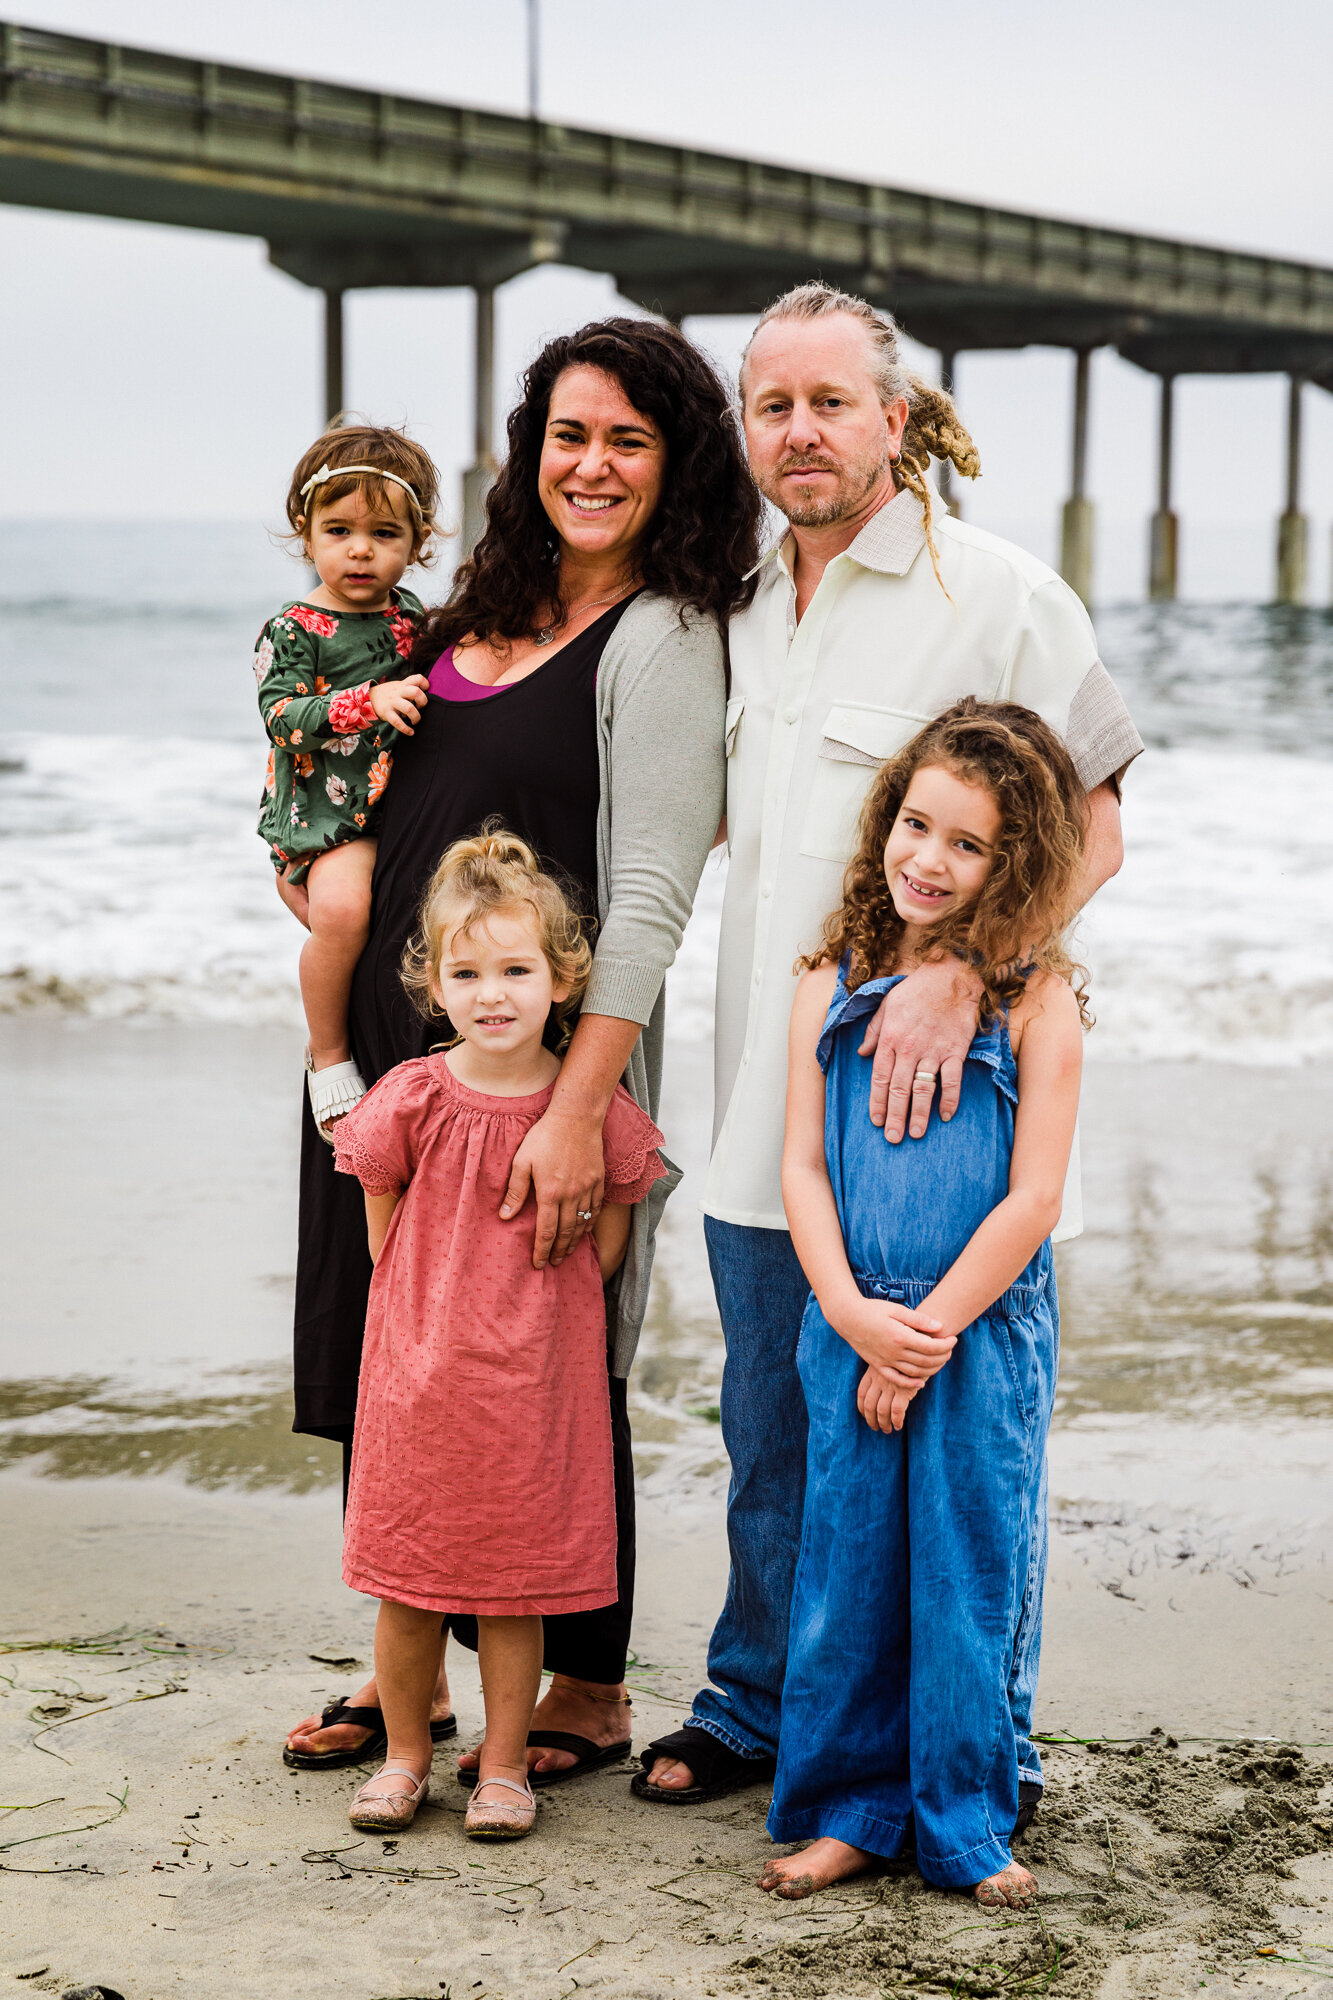 Family Portrait Photography Session at Ocean Beach Pier, San Diego, California-21.jpg